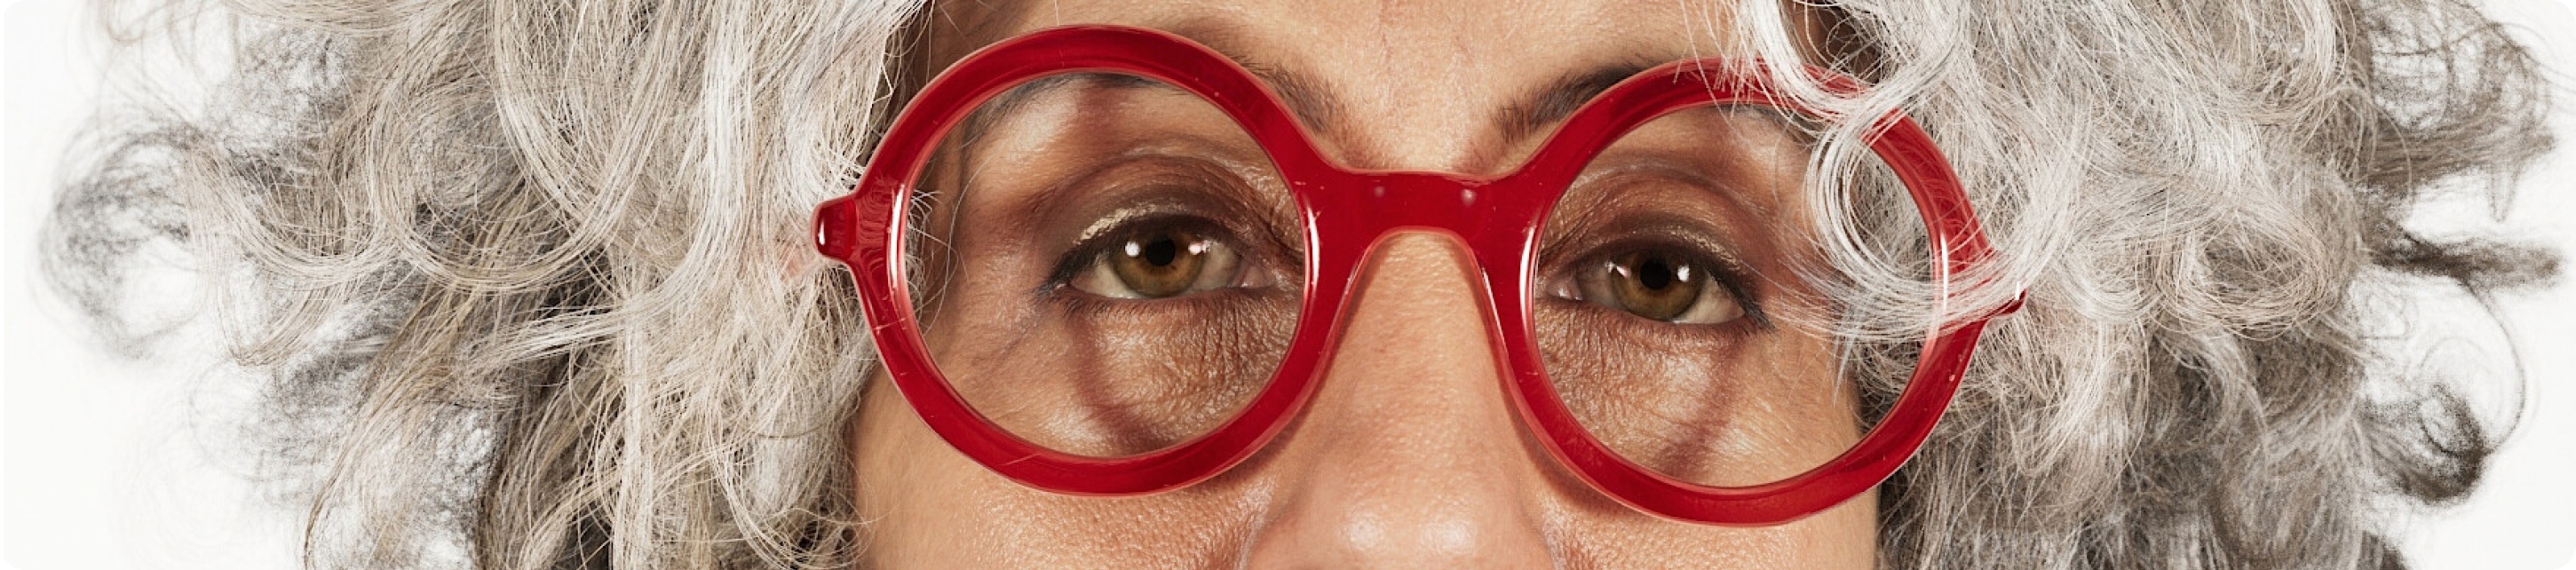 Glasses Woman by Sefki Ibrahim